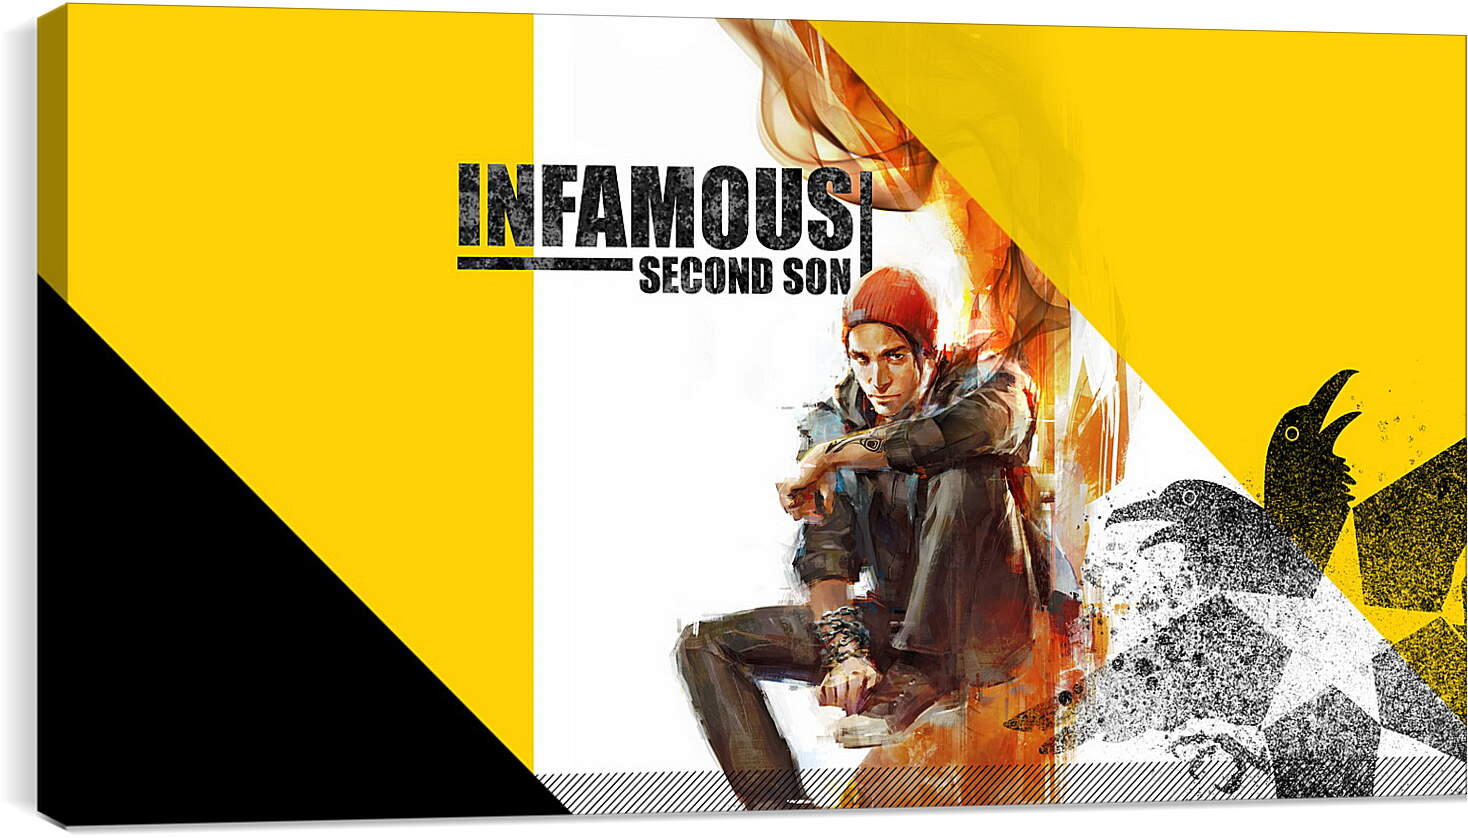 Постер и плакат - InFamous: Second Son
